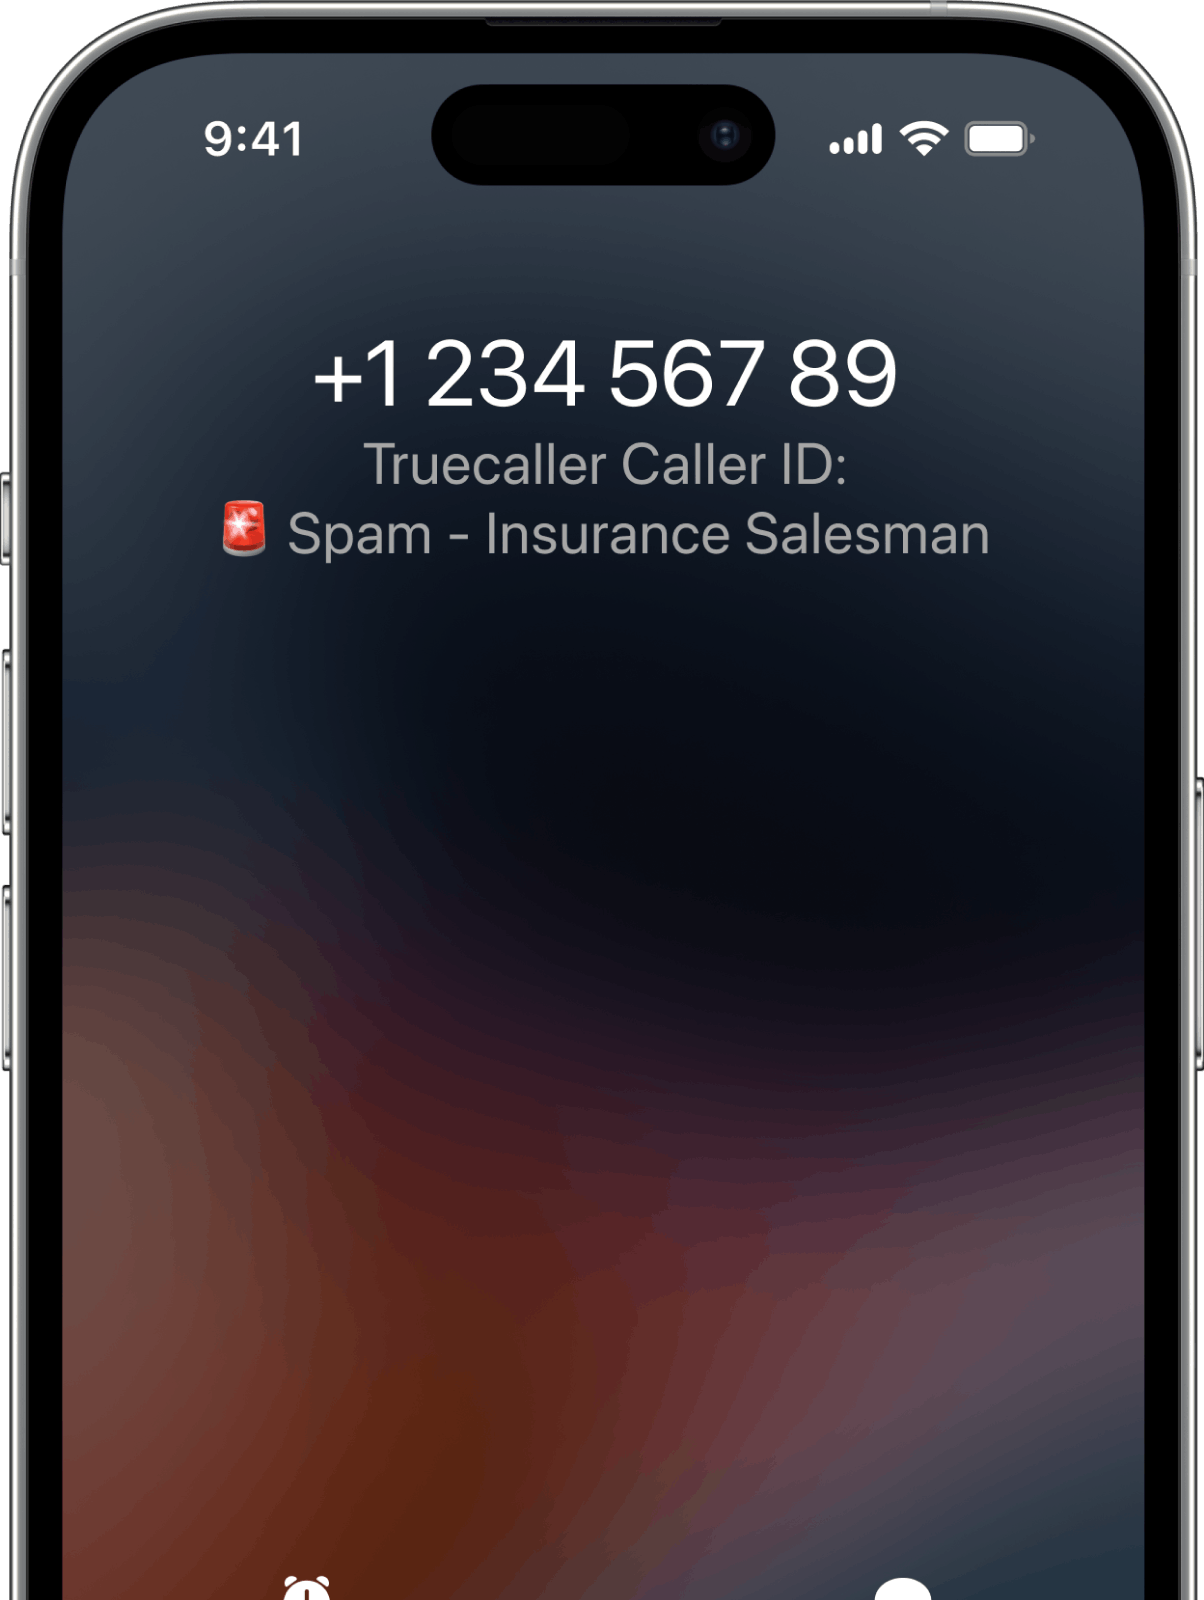 Truecaller Caller ID for iOS